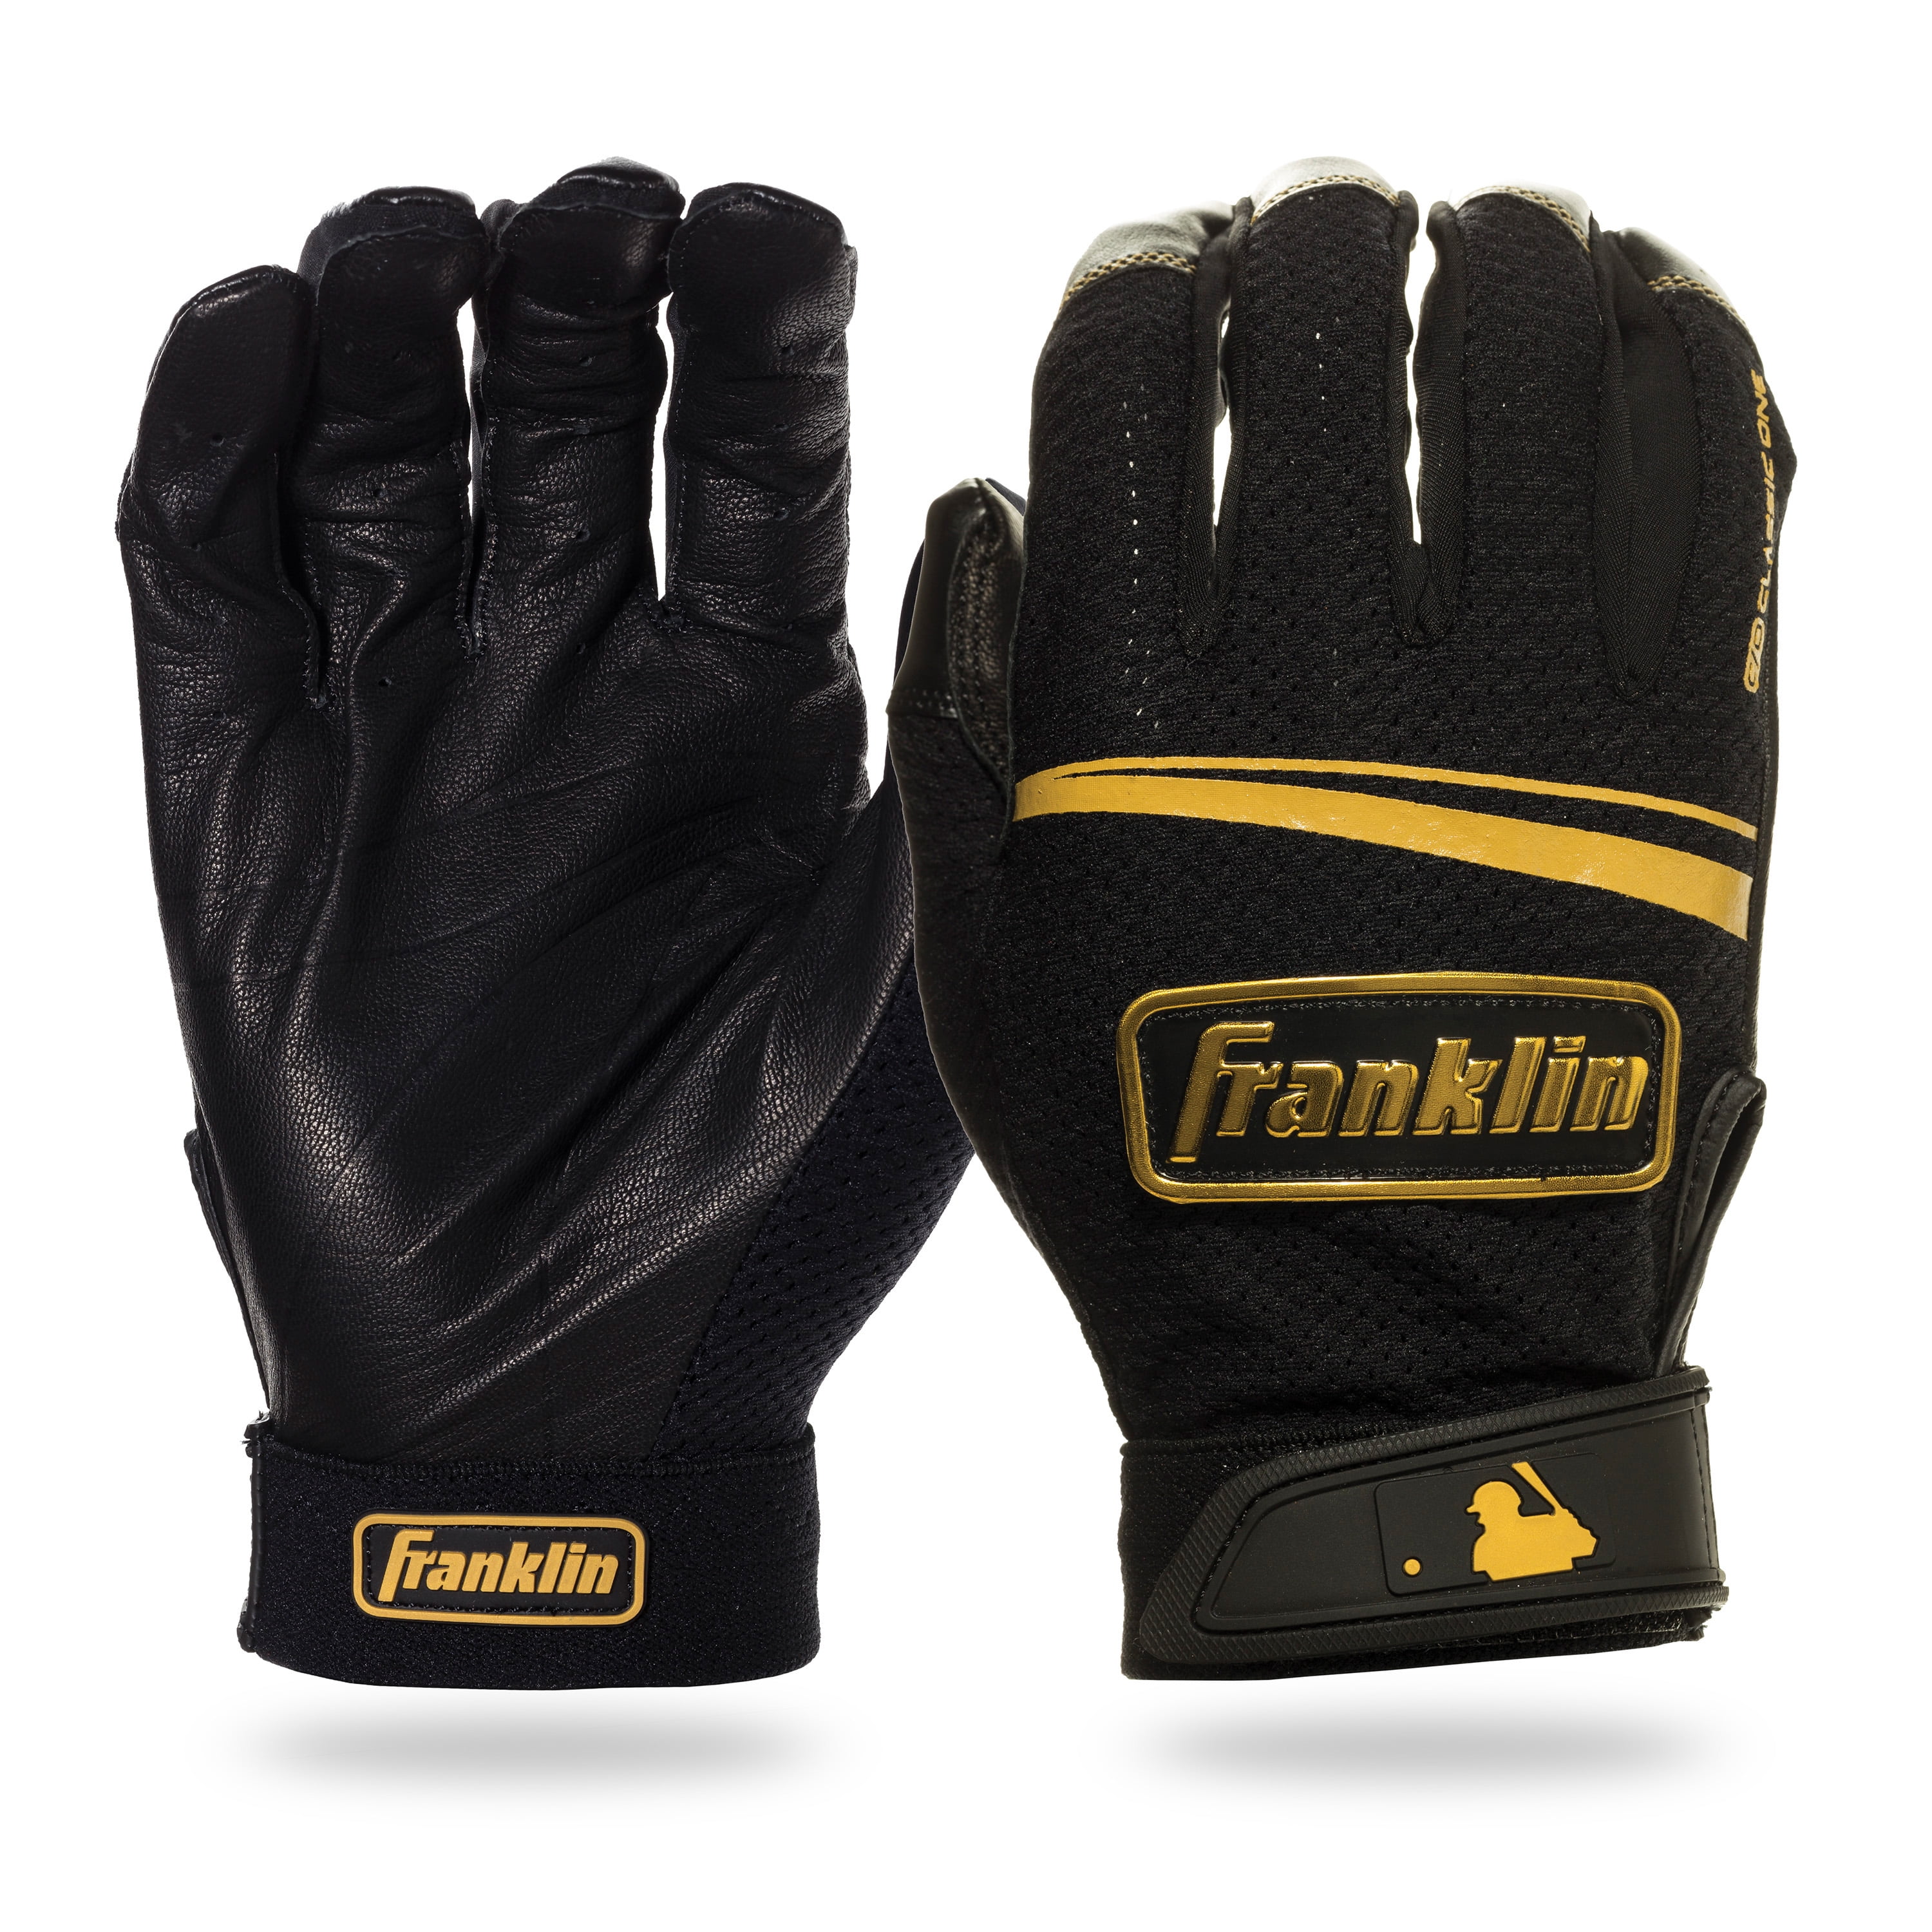 Franklin TeeBall Flex Batting Gloves Size Youth Small Black on Black Colorway 